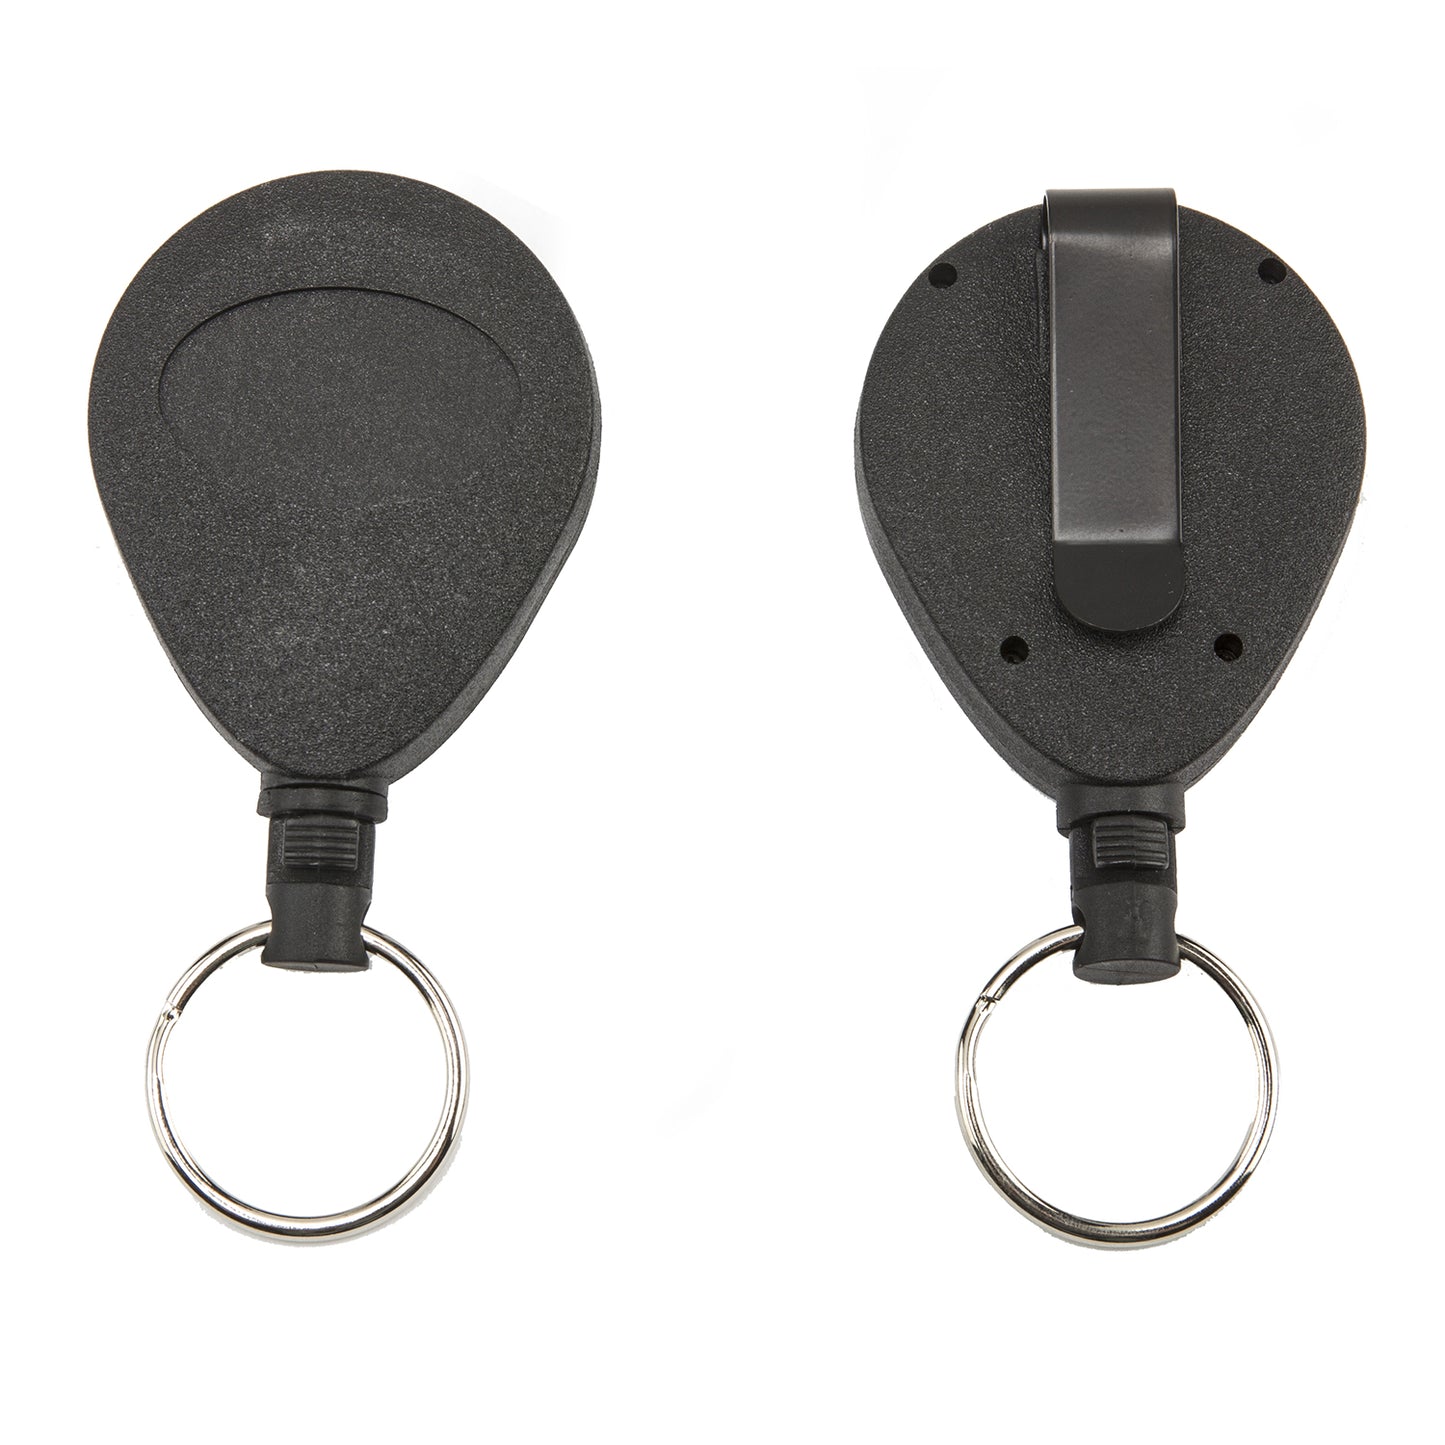 Heavy duty plastic lockable key holder with split ring - Pack of 10